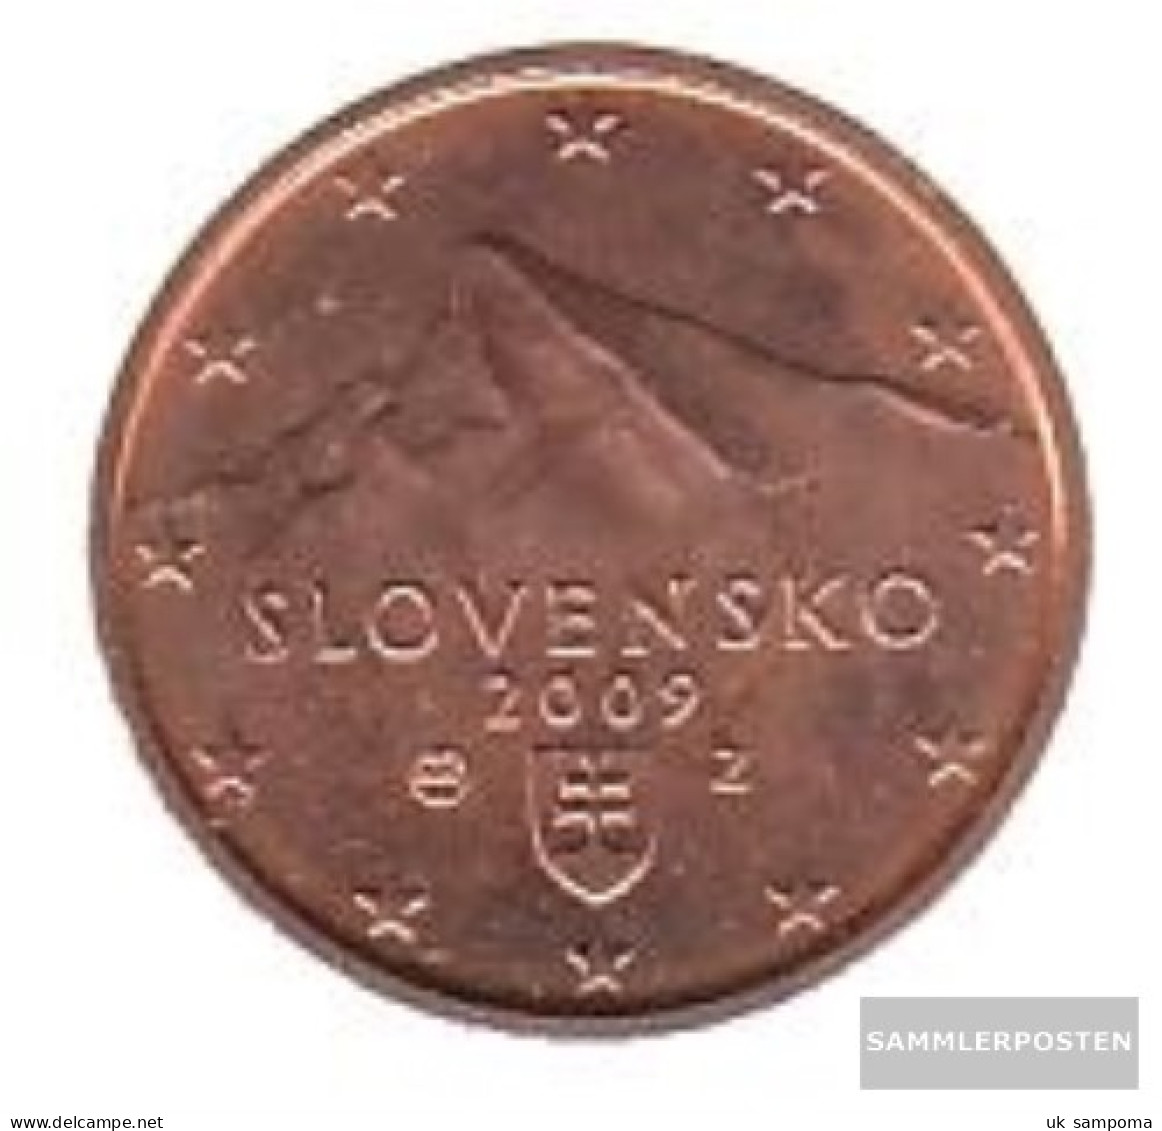 Slovakia Sk 2 2009 Stgl./unzirkuliert Stgl./unzirkuliert 2009 Kursmünze 2 Cent - Slovaquie